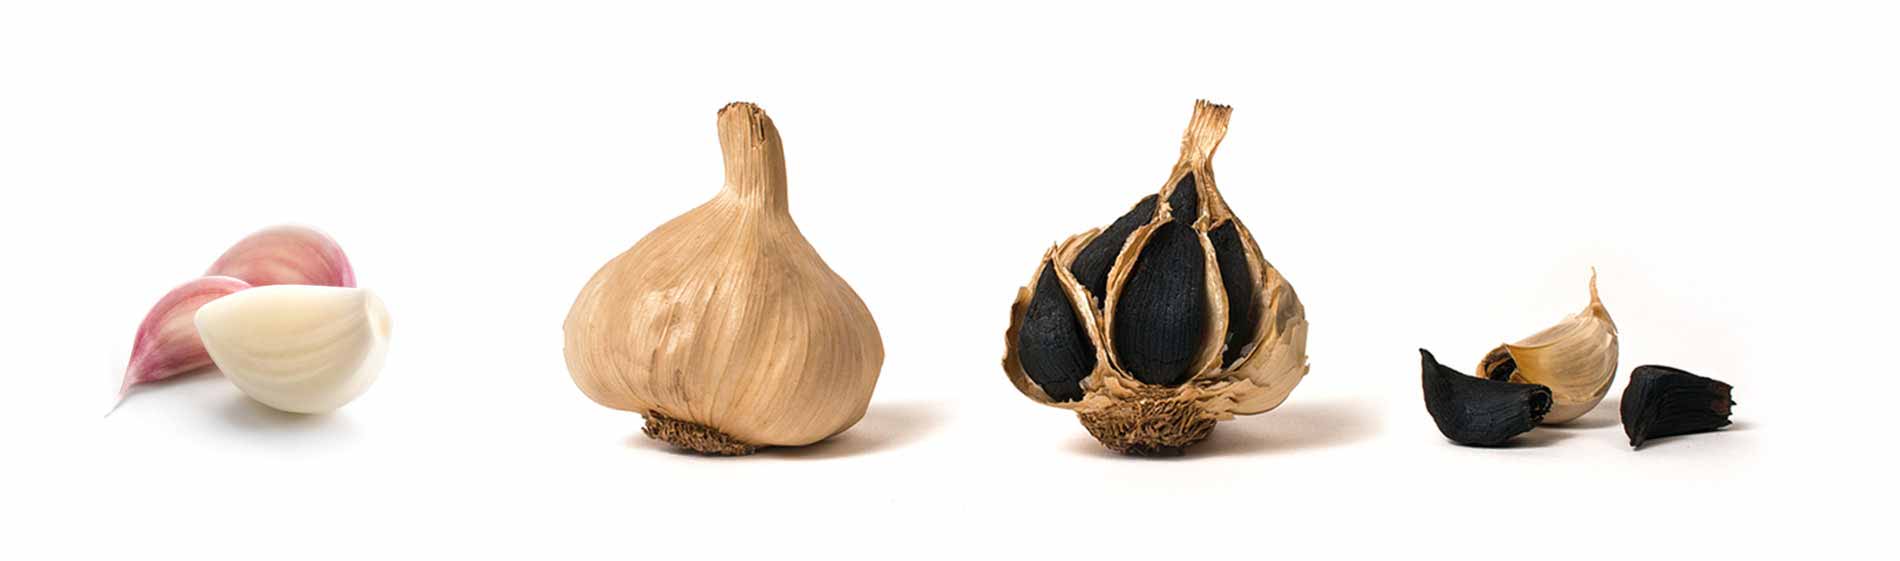 flexible packaging - black garlic